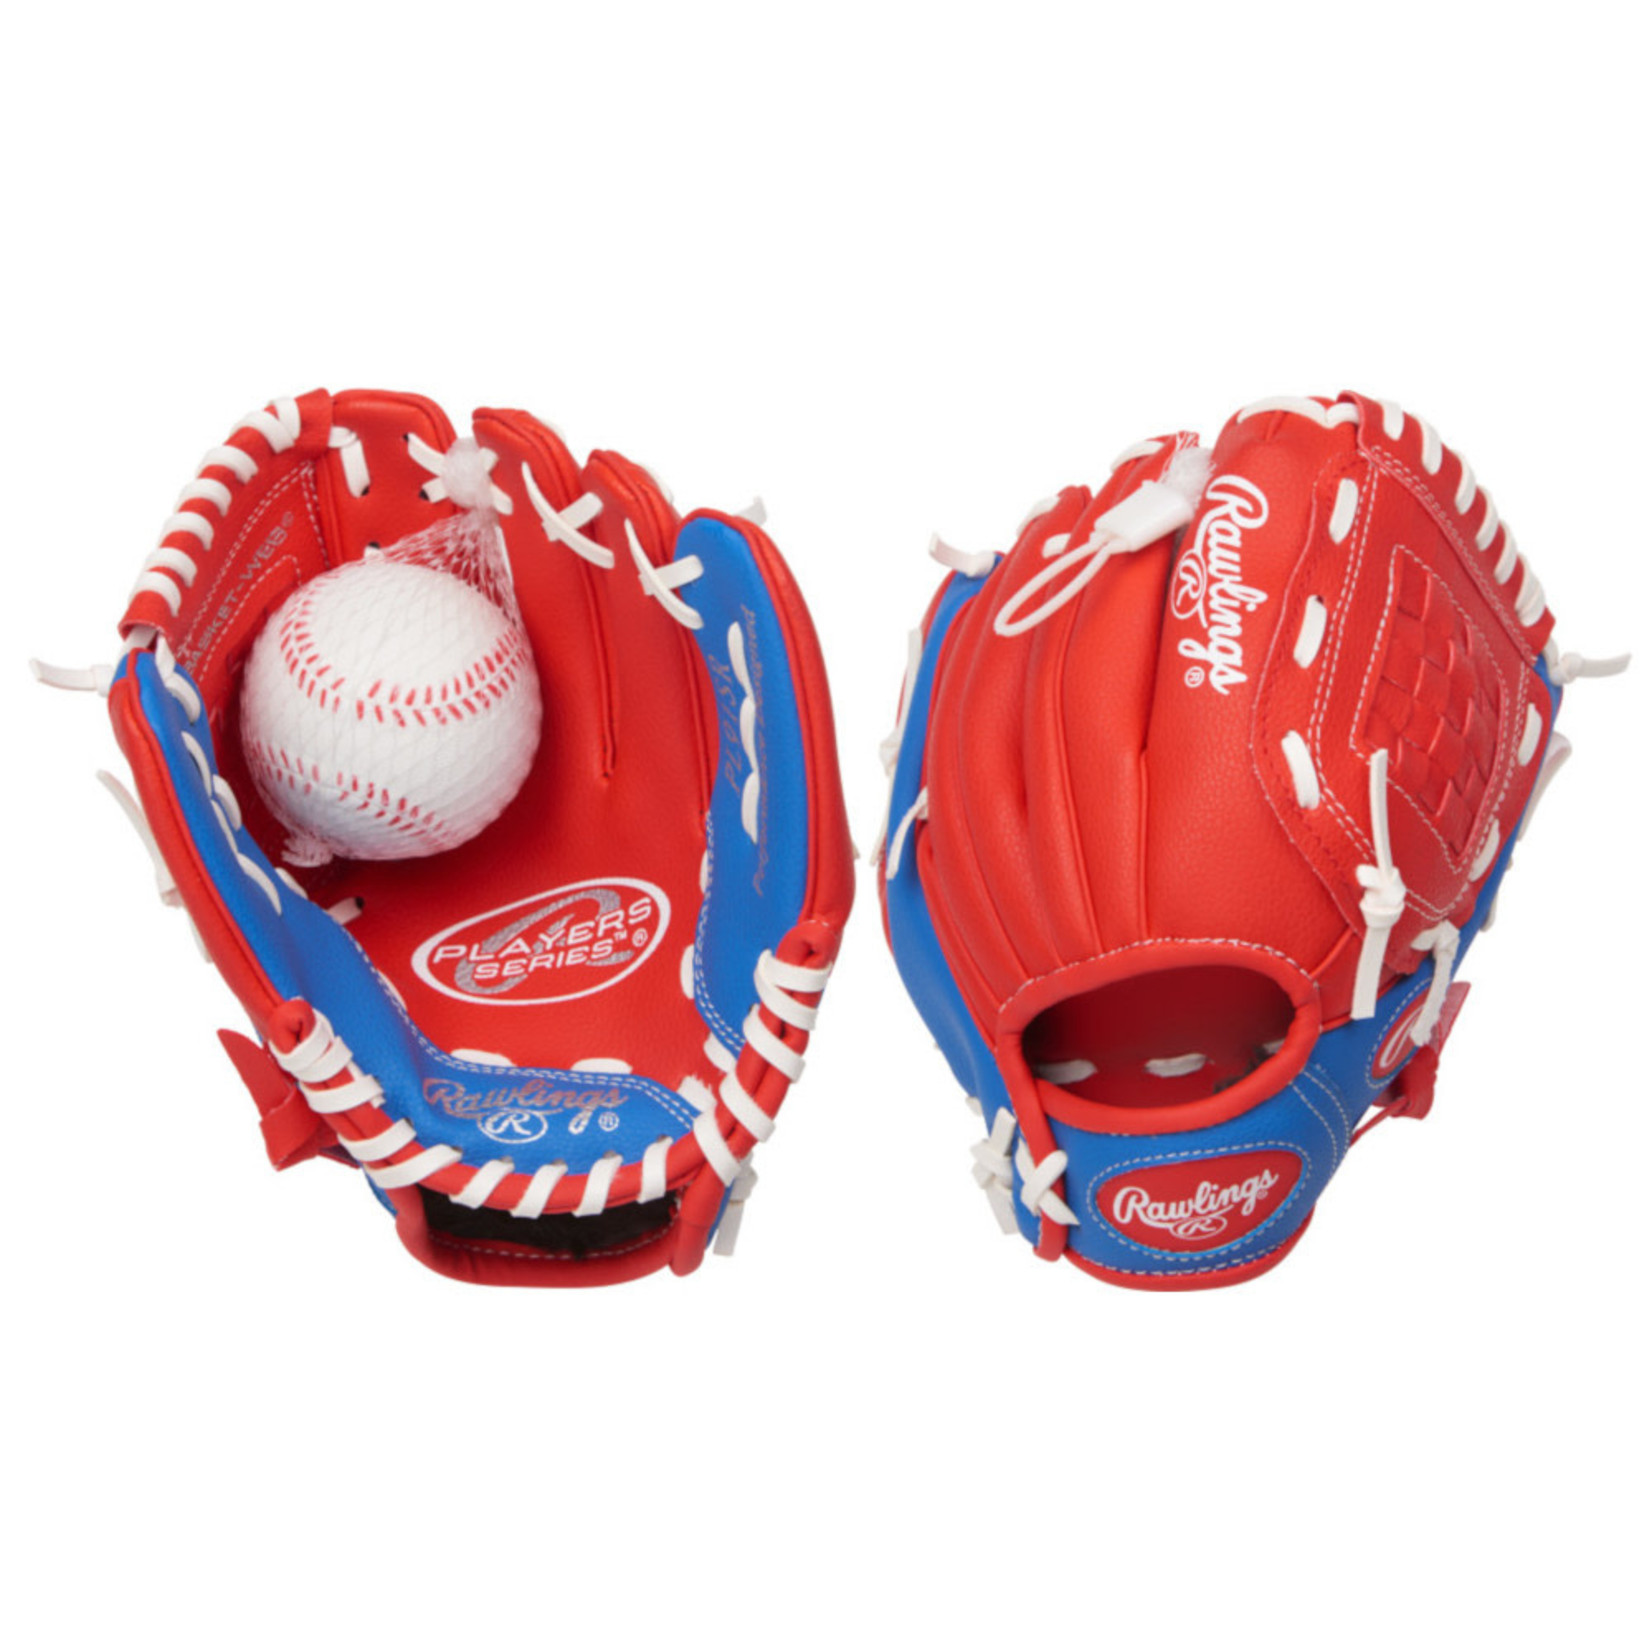 Rawlings Rawlings Baseball Glove, Players Series, PL91SR, 9", Reg, Youth